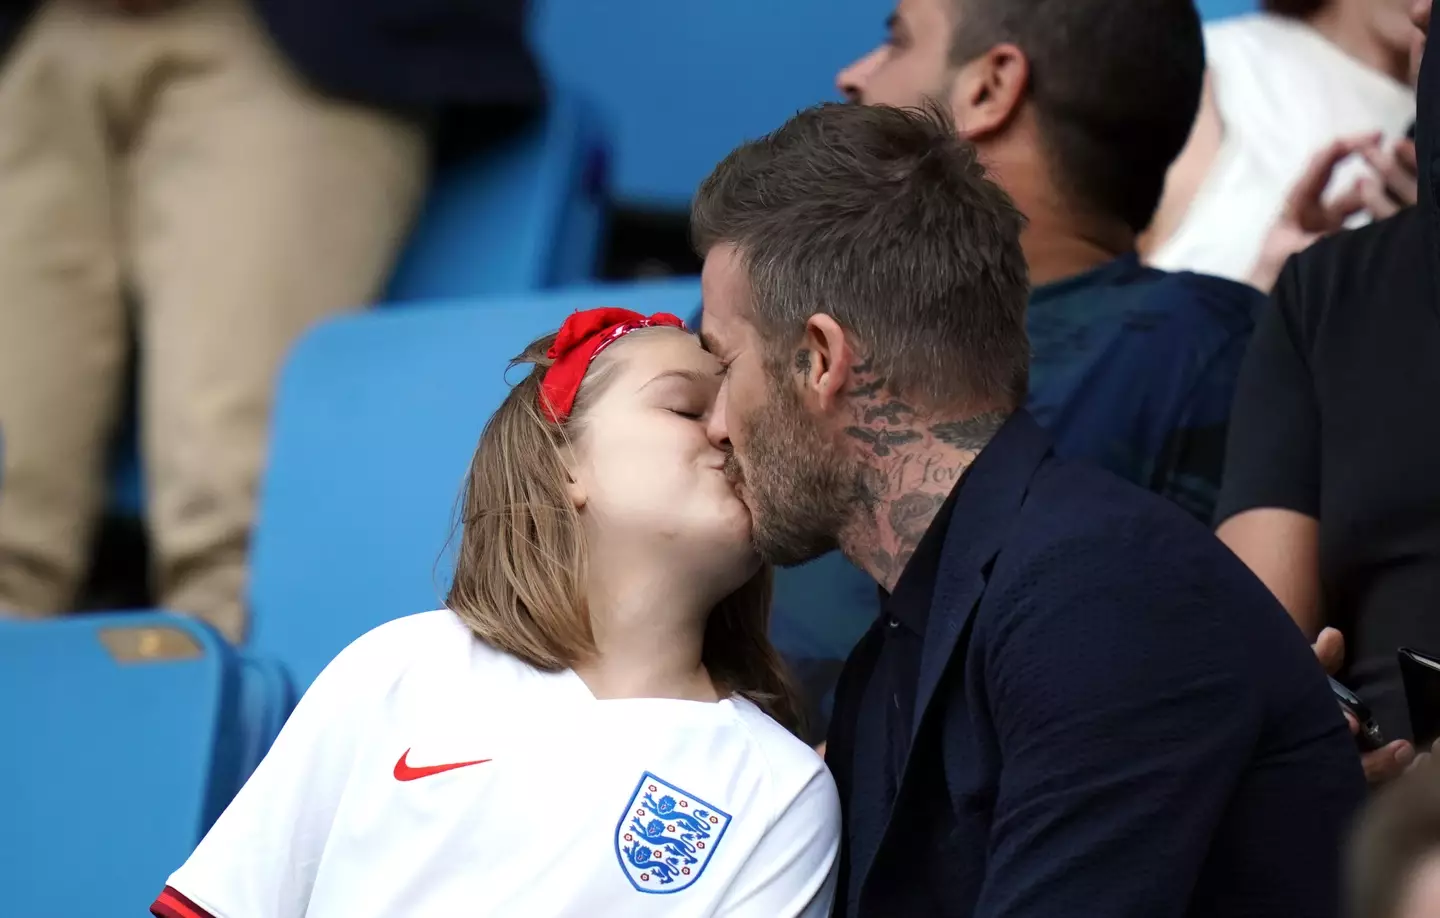 Beckham said he kisses 'all [his] kids on the lips'.